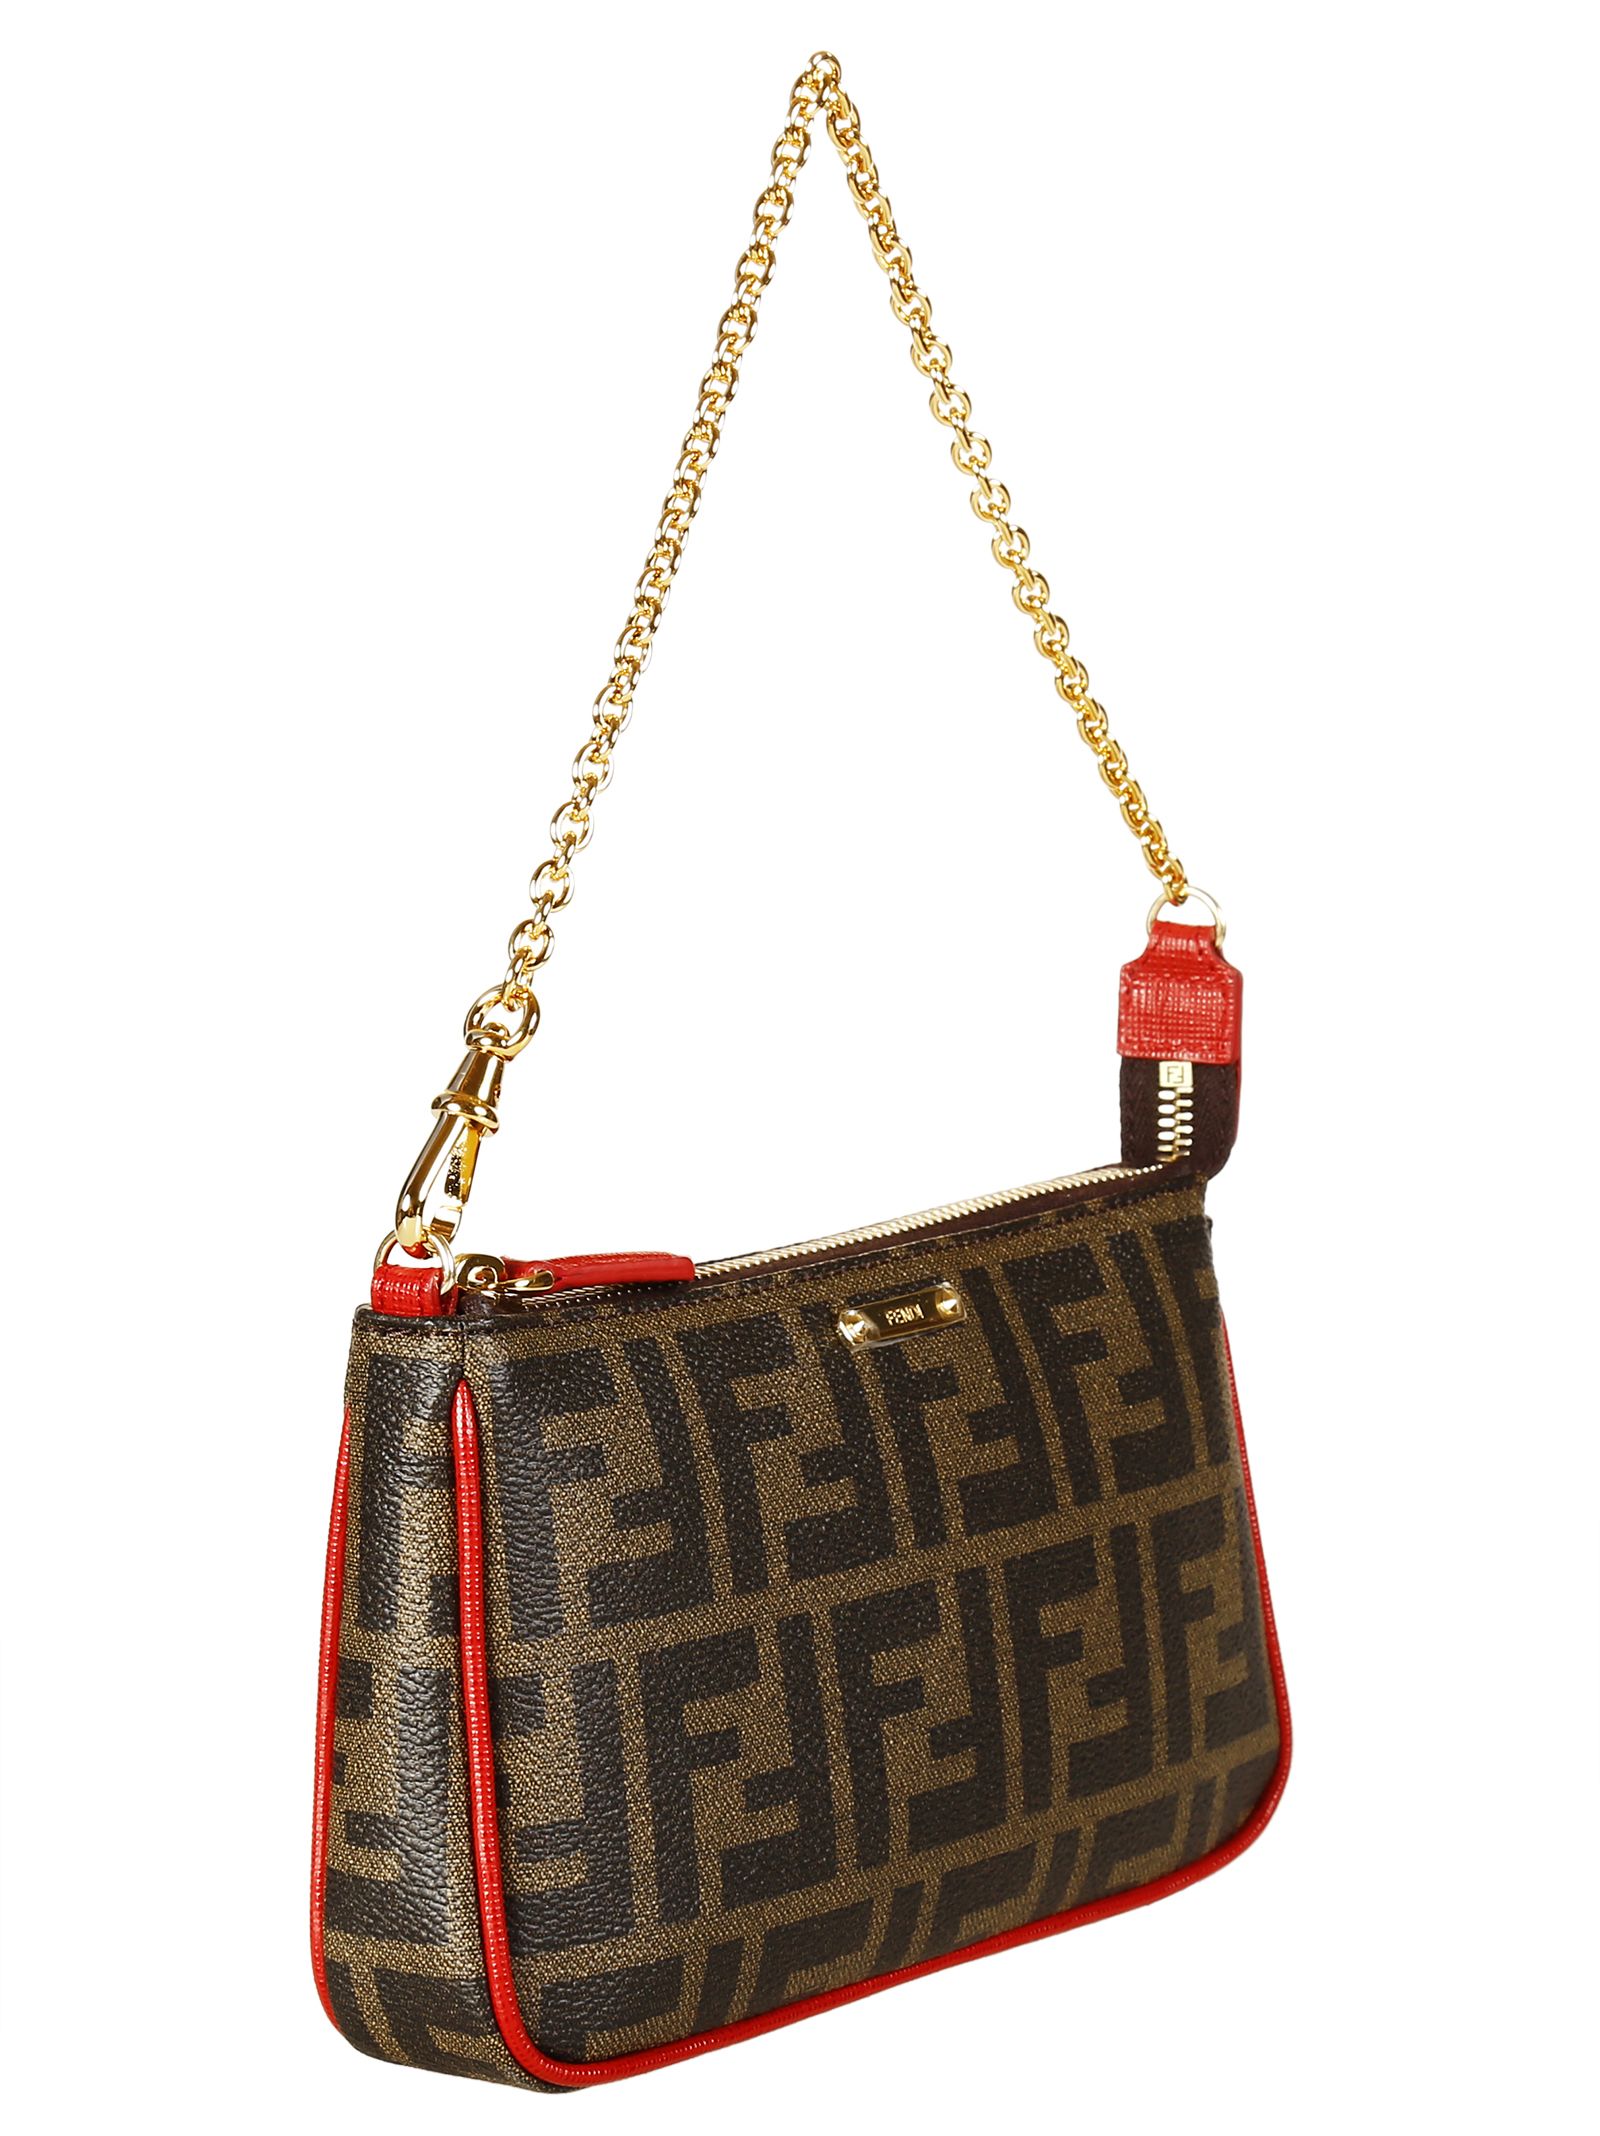 Fendi - Fendi Logo Mini Bag - Tobacco/Red, Women's Clutches | Italist